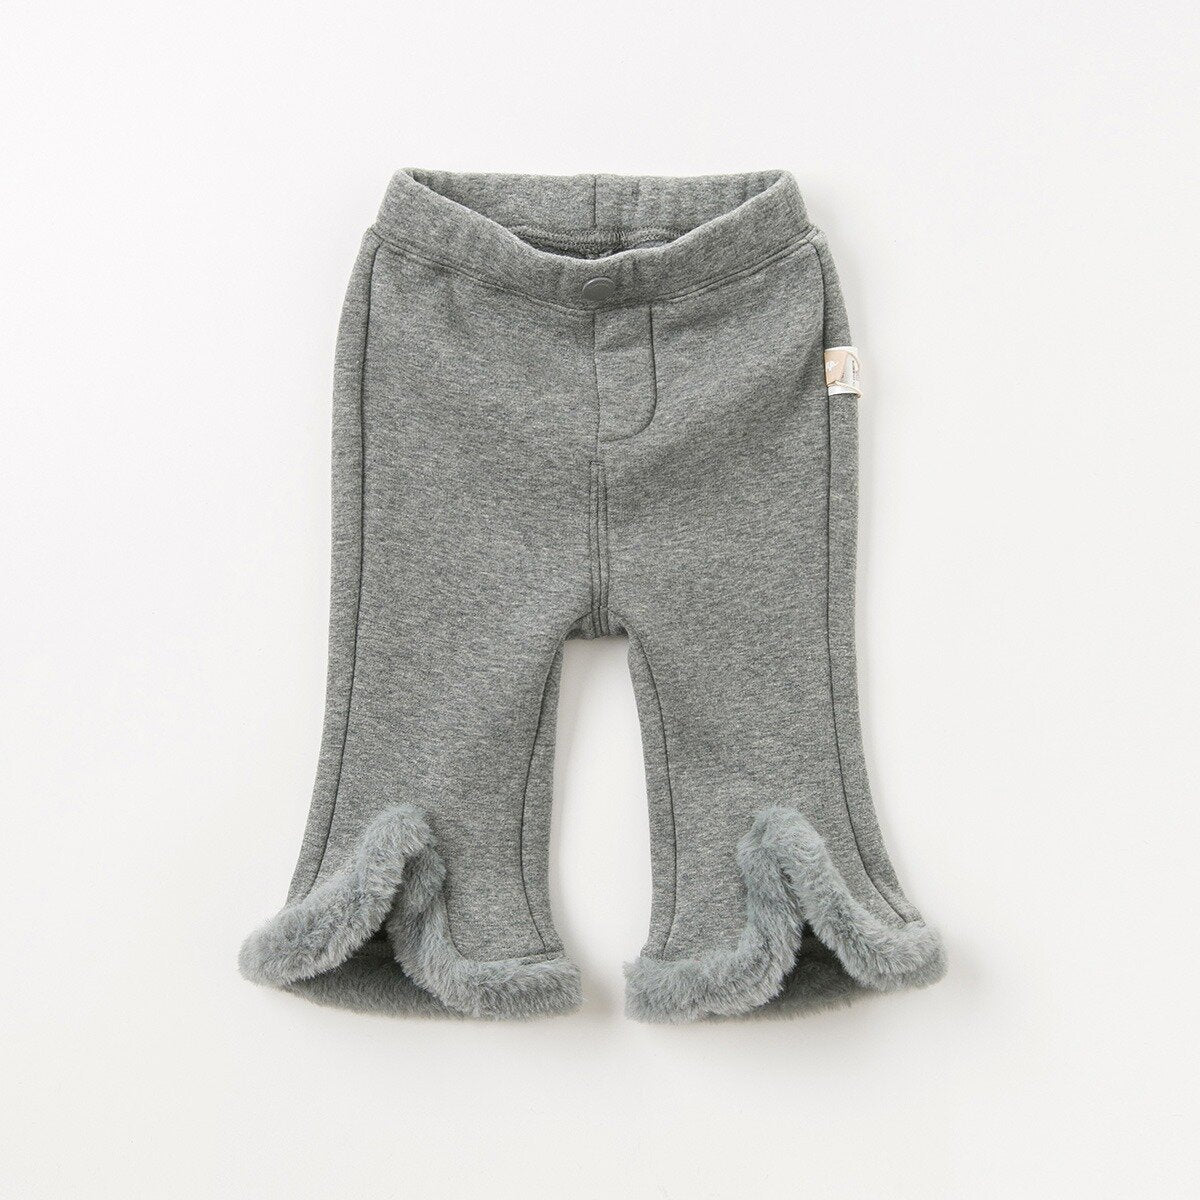 [Last] Fleece Lined Bell Pants 7yrs(130cm) - pink